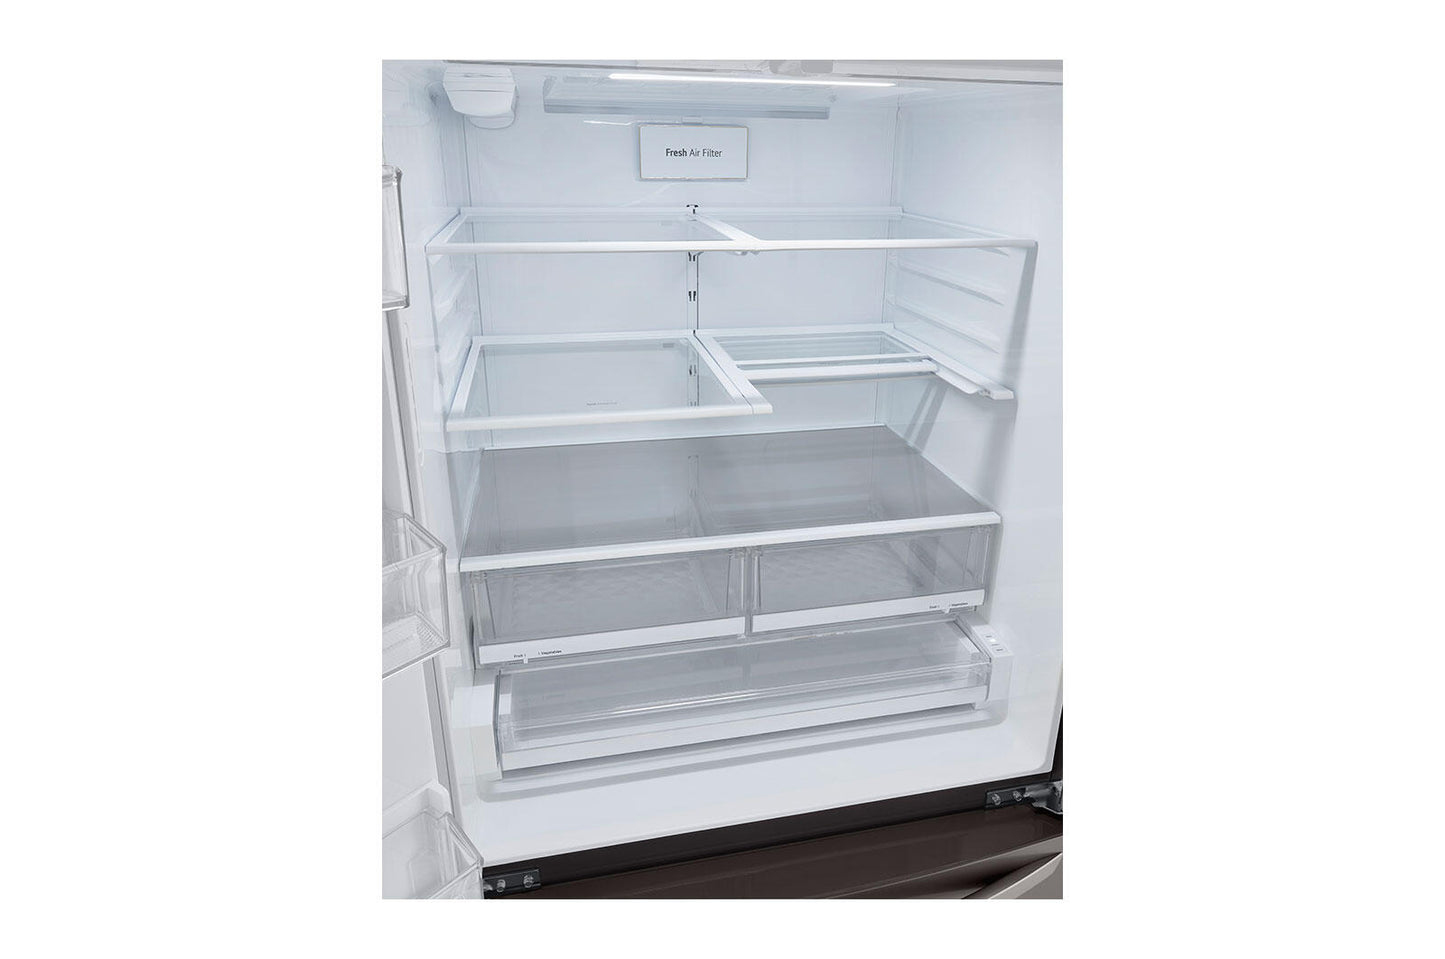 Lg LRMXS2806D 28 Cu Ft. Smart Double Freezer Refrigerator With Craft Ice&#8482;